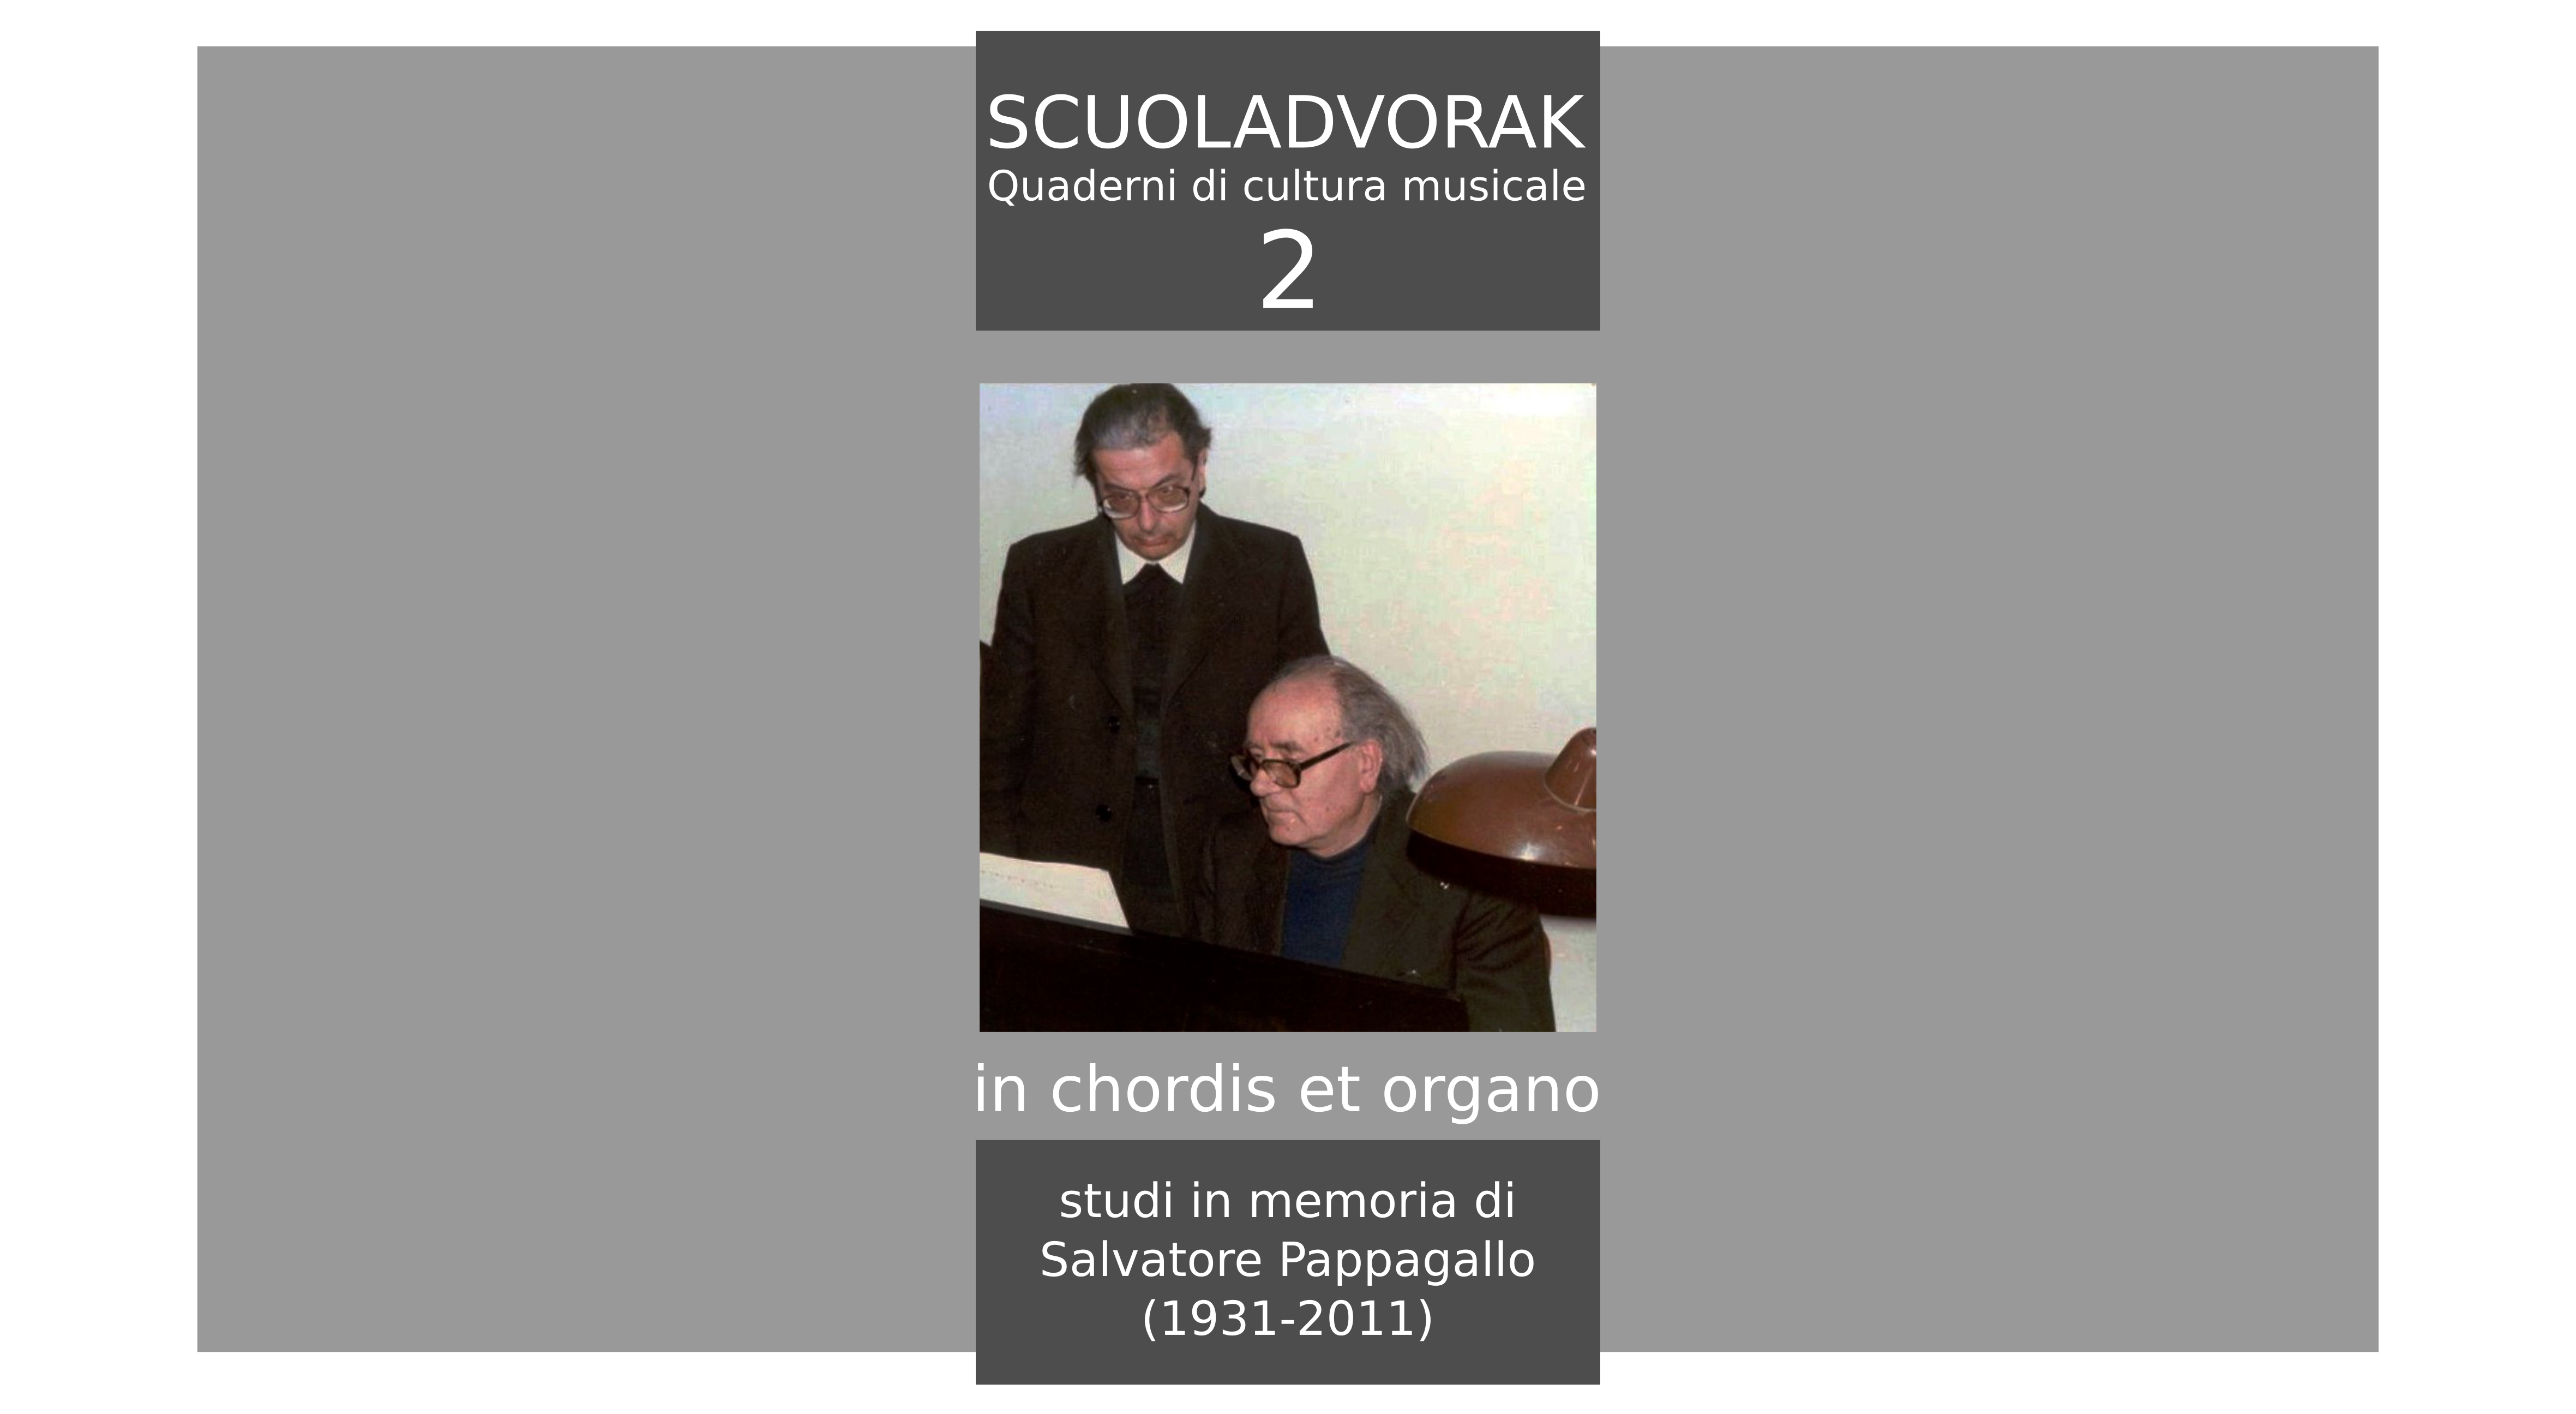 in chordis et organo, studi in memoria di Salvatore Pappagallo